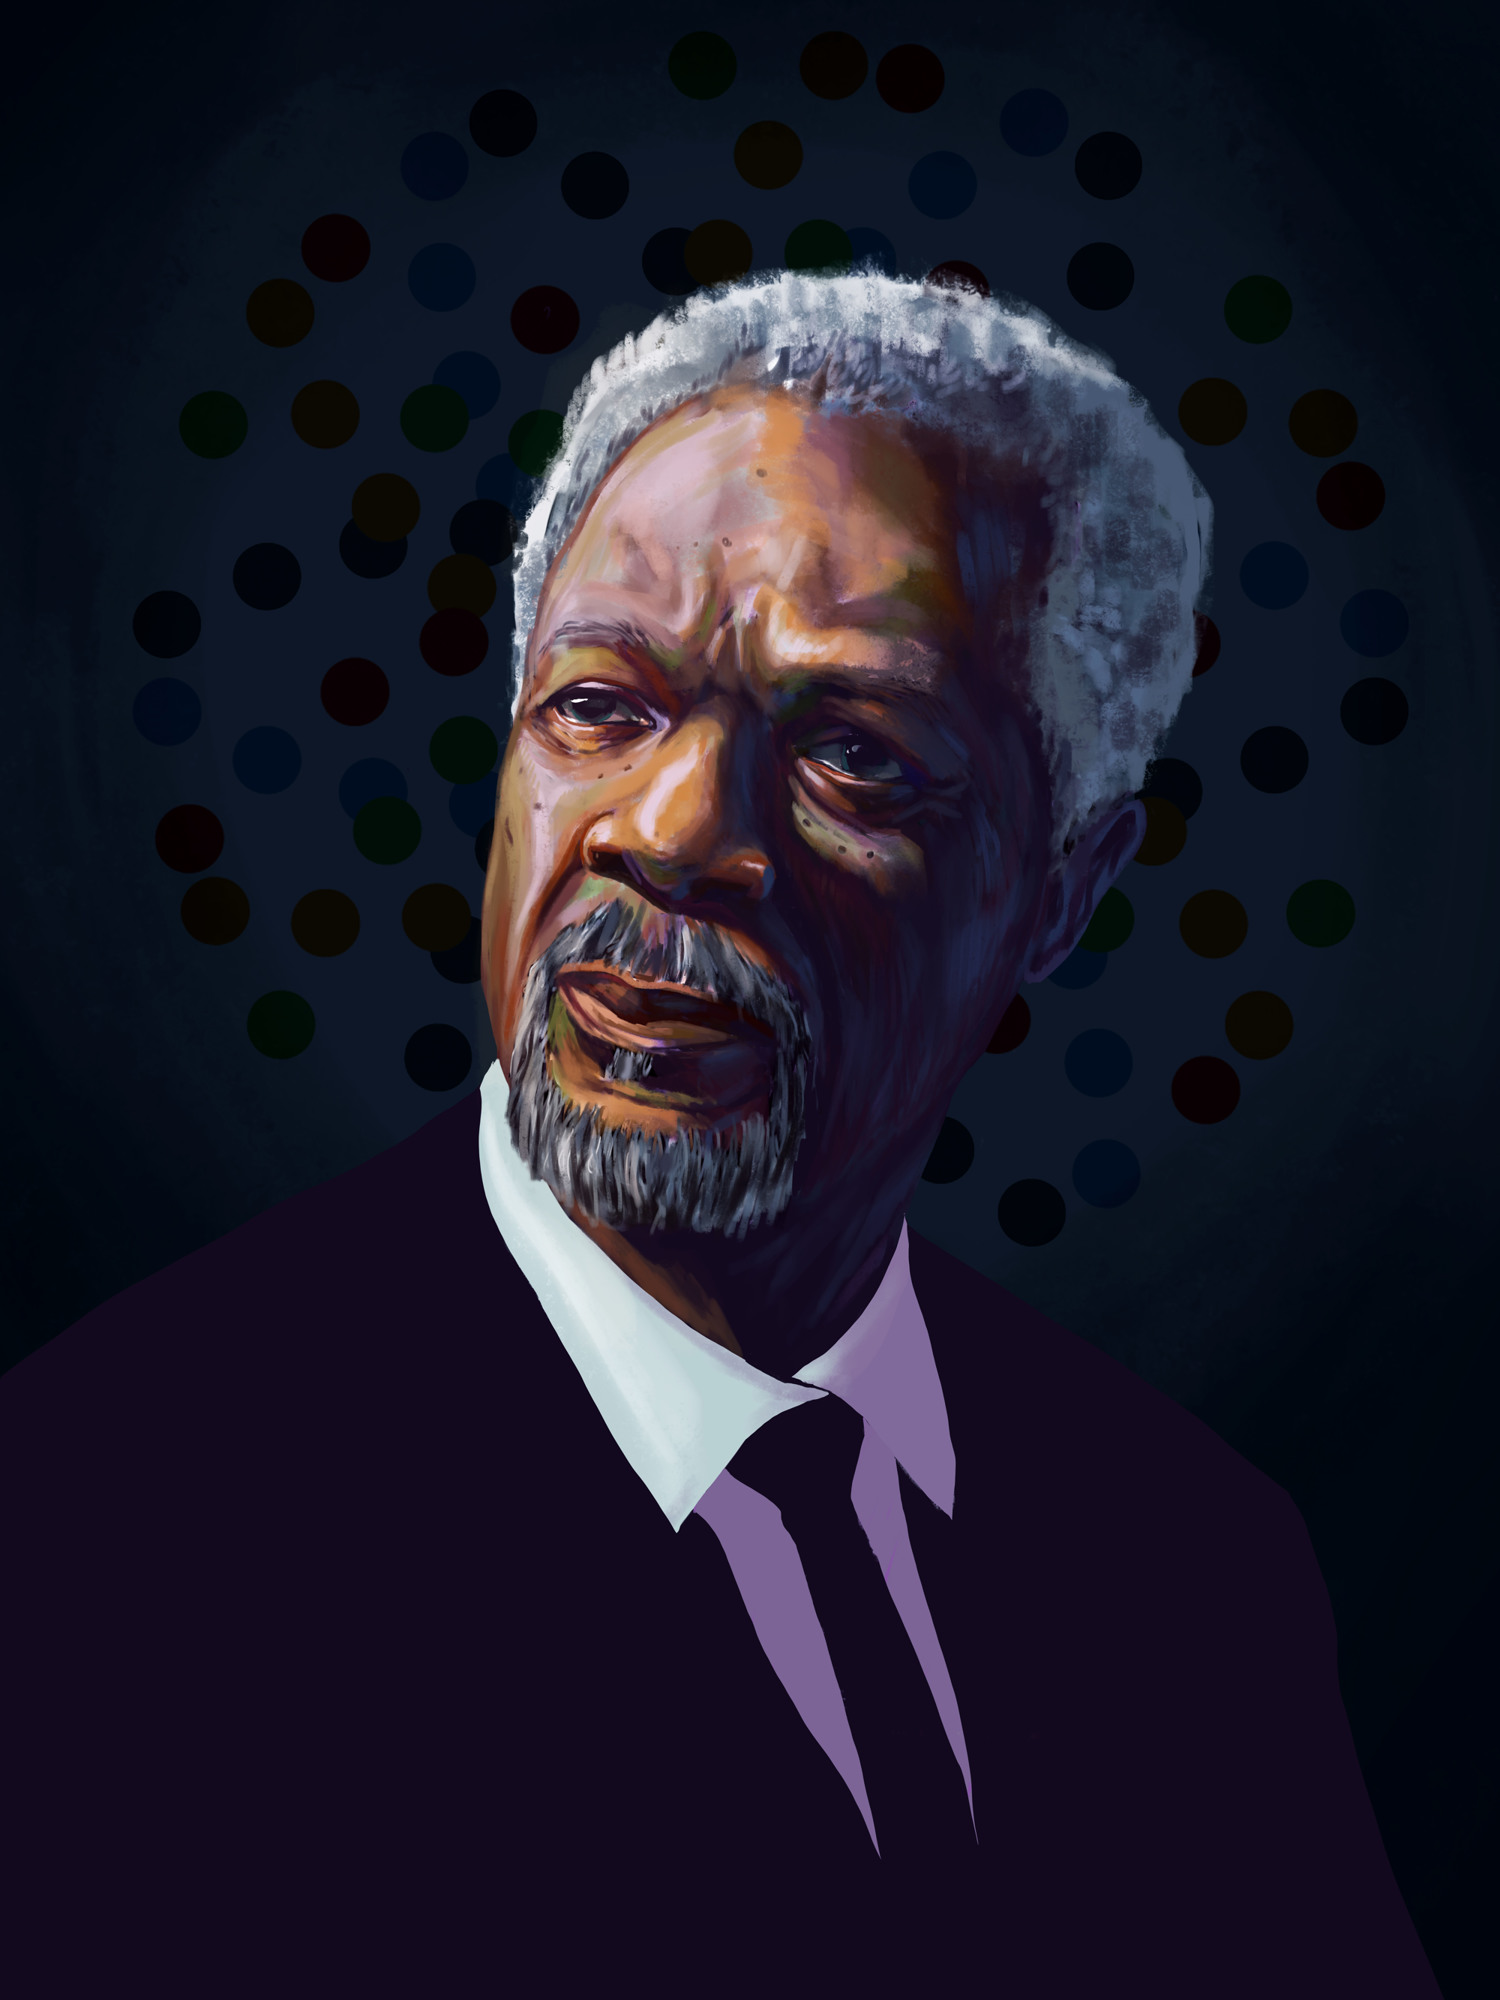 L'Hrar's portait of Kofi Annan.